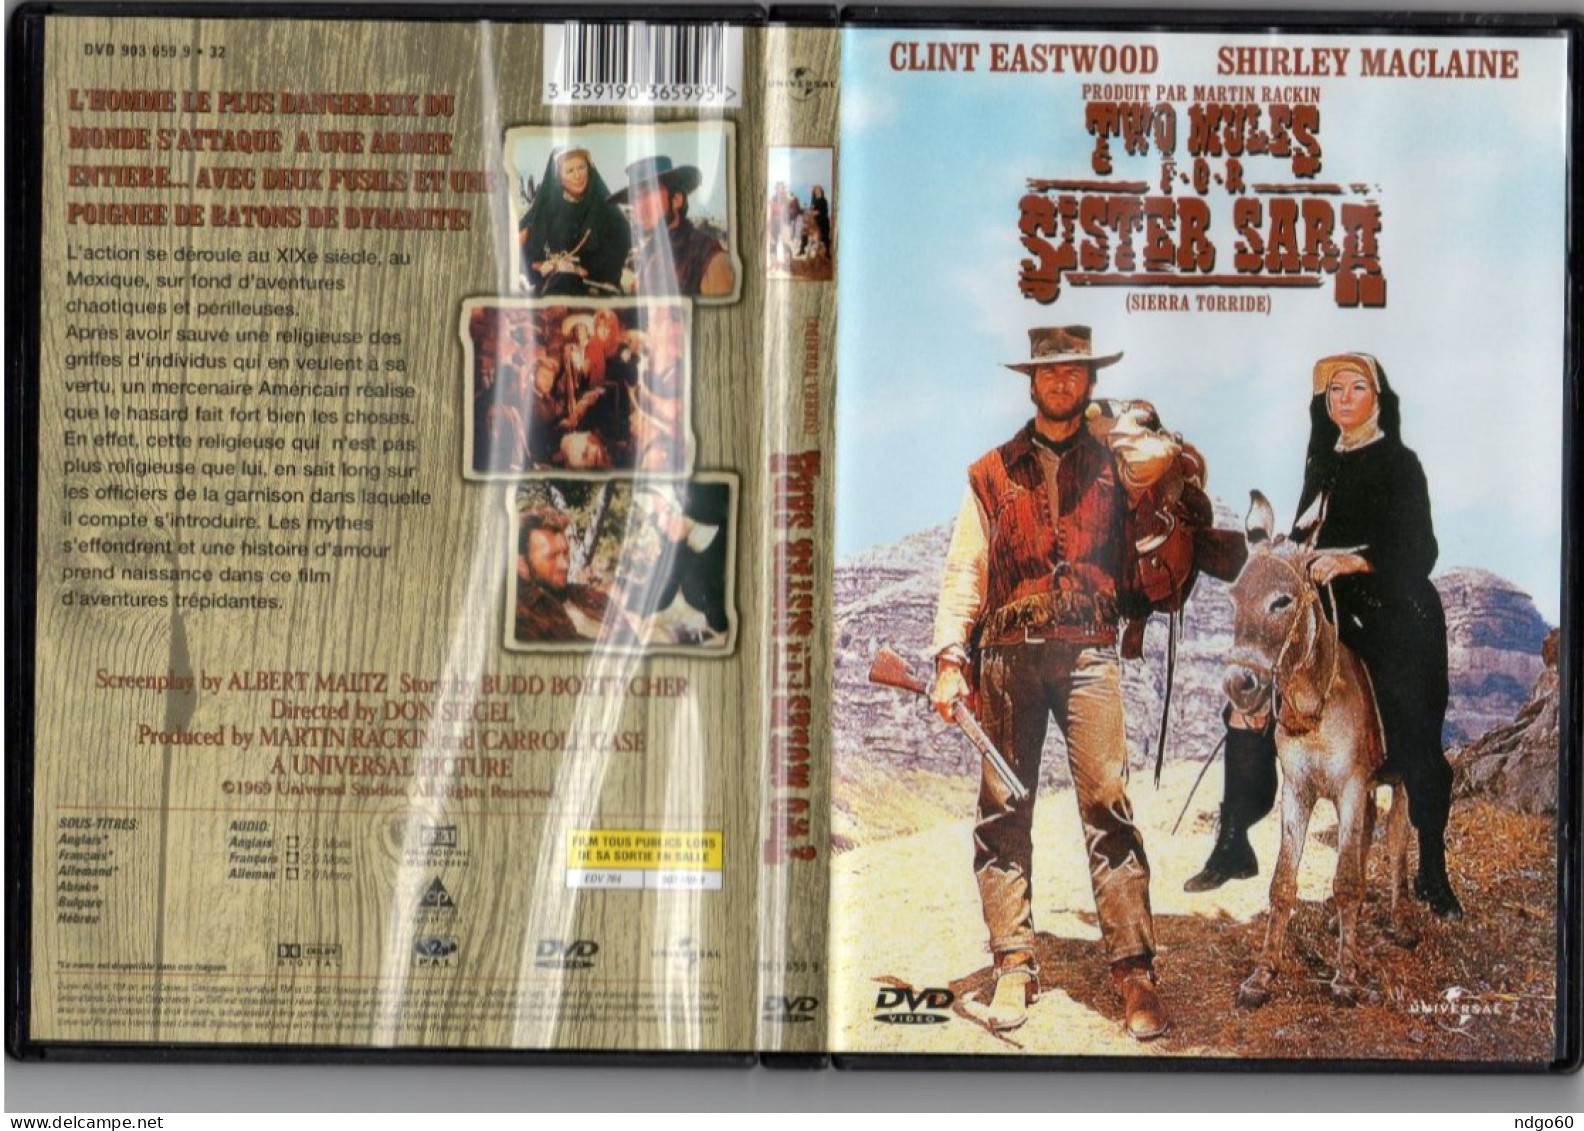 DVD Western - Two Mules For Sister Sara / Sierra Torride (1969 ) Avec Clint Eastwood - Western / Cowboy